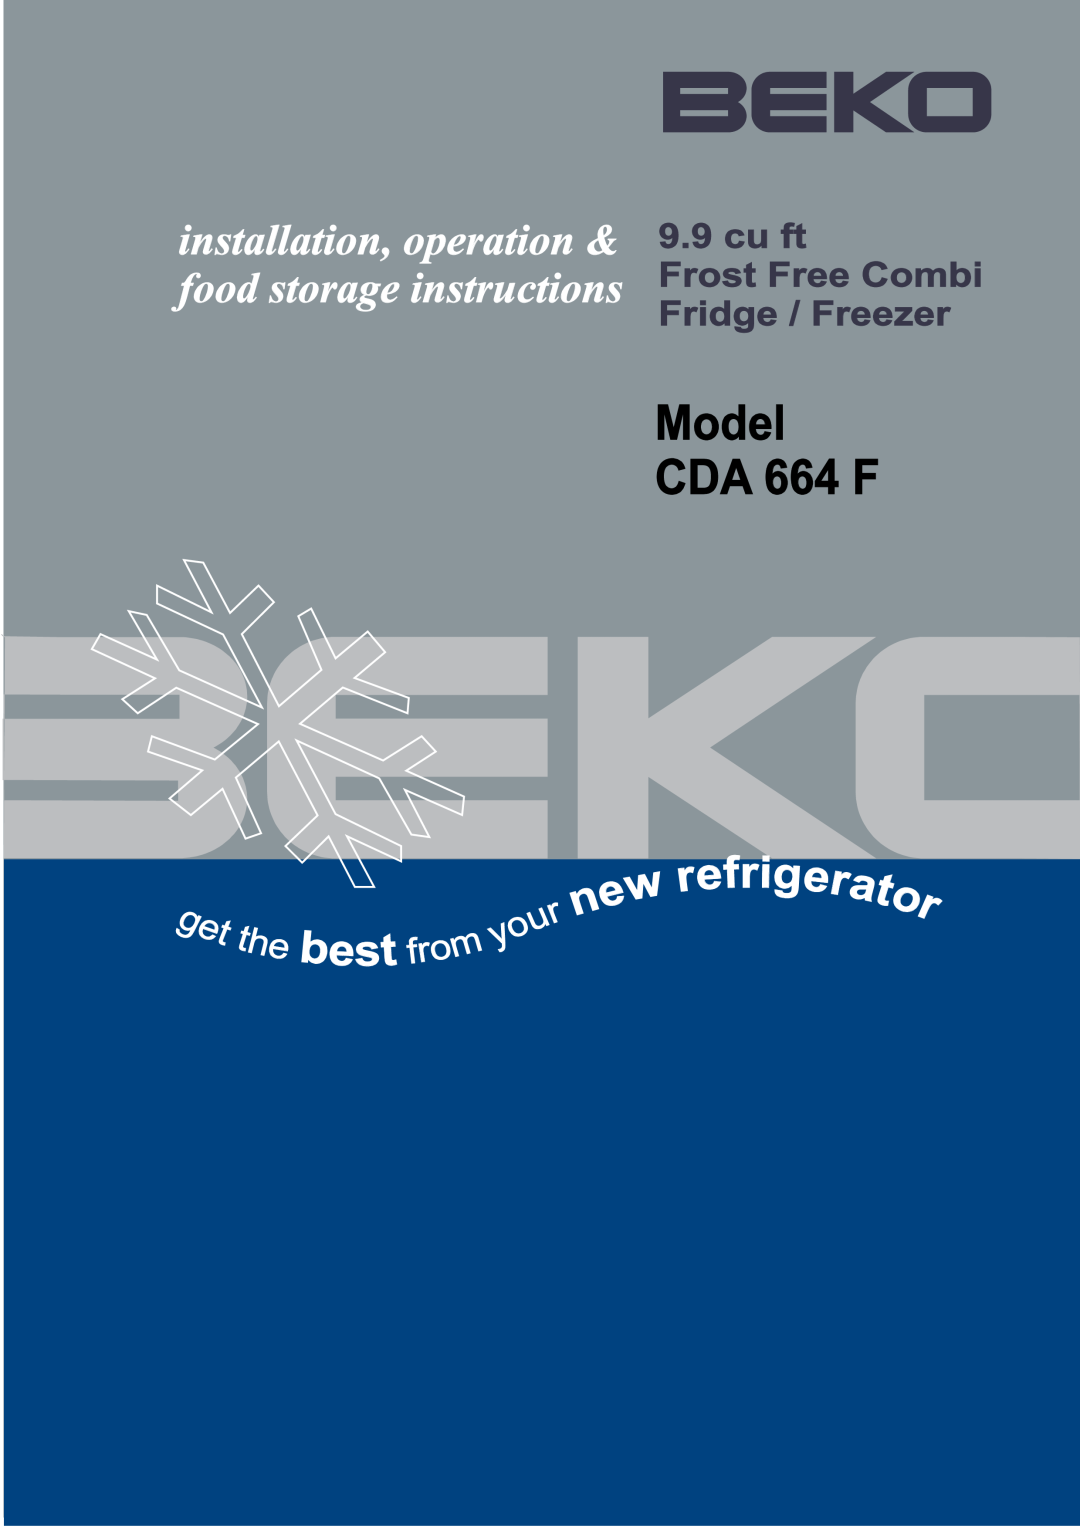 Beko CDA 664 F manual best, refr, Model CDA 664F, installation, operation& food storage instructions 